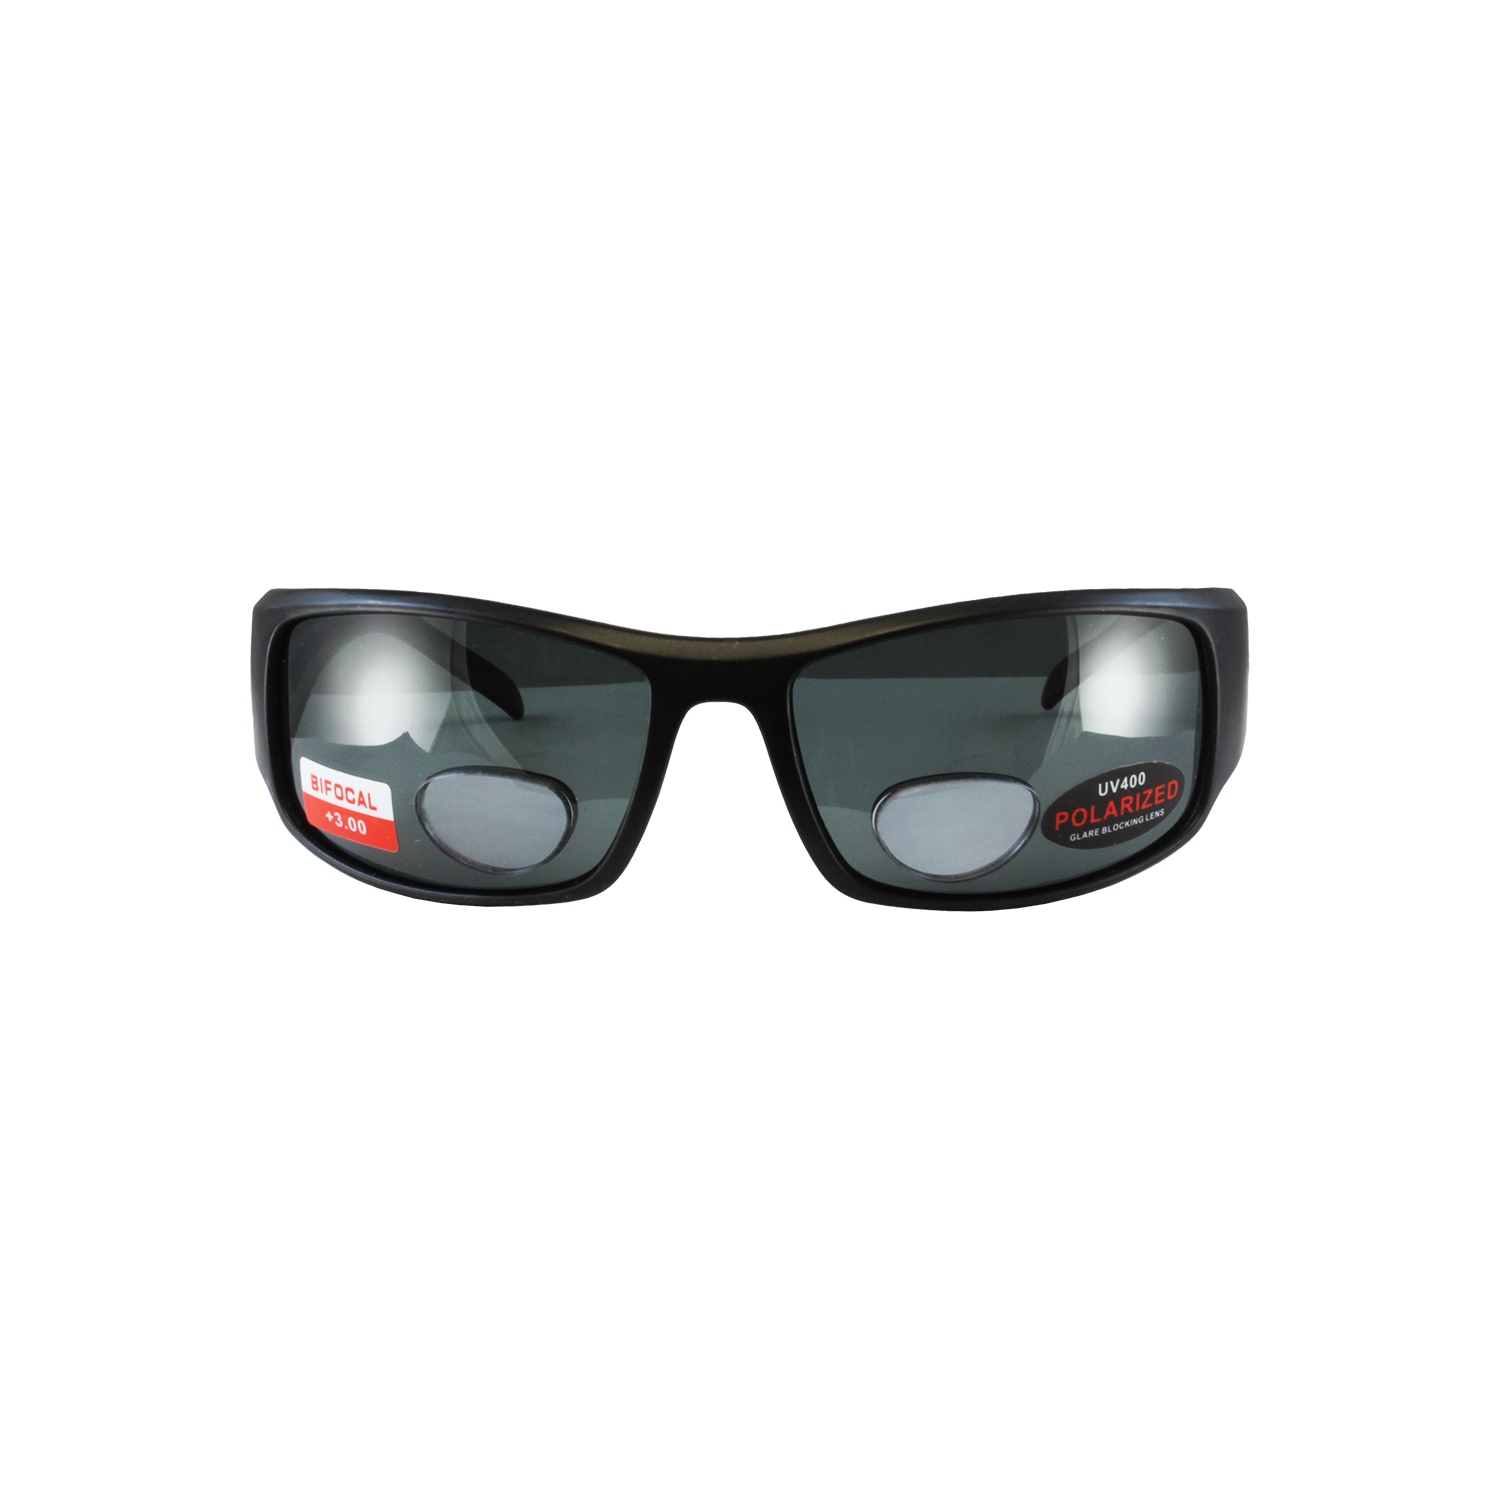 BlueWater Polarized Bifocal 1 Sunglasses Matte Black Frames +1.5